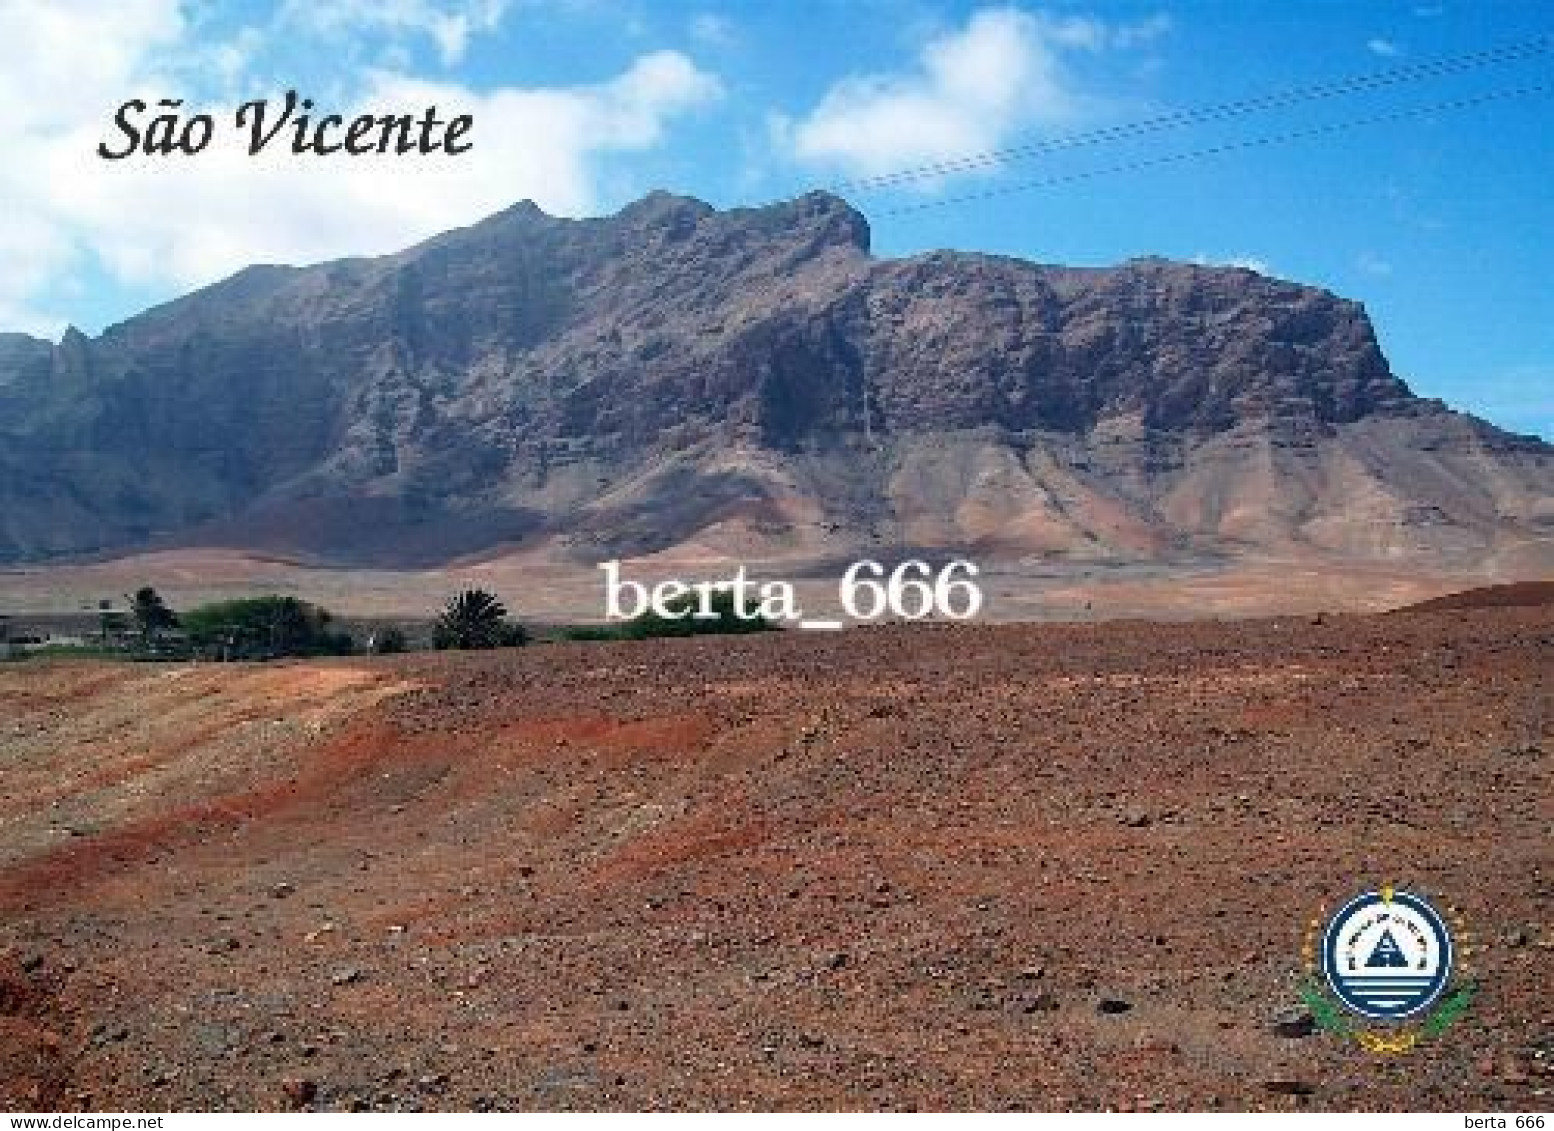 Cape Verde Sao Vicente Island New Postcard - Cape Verde